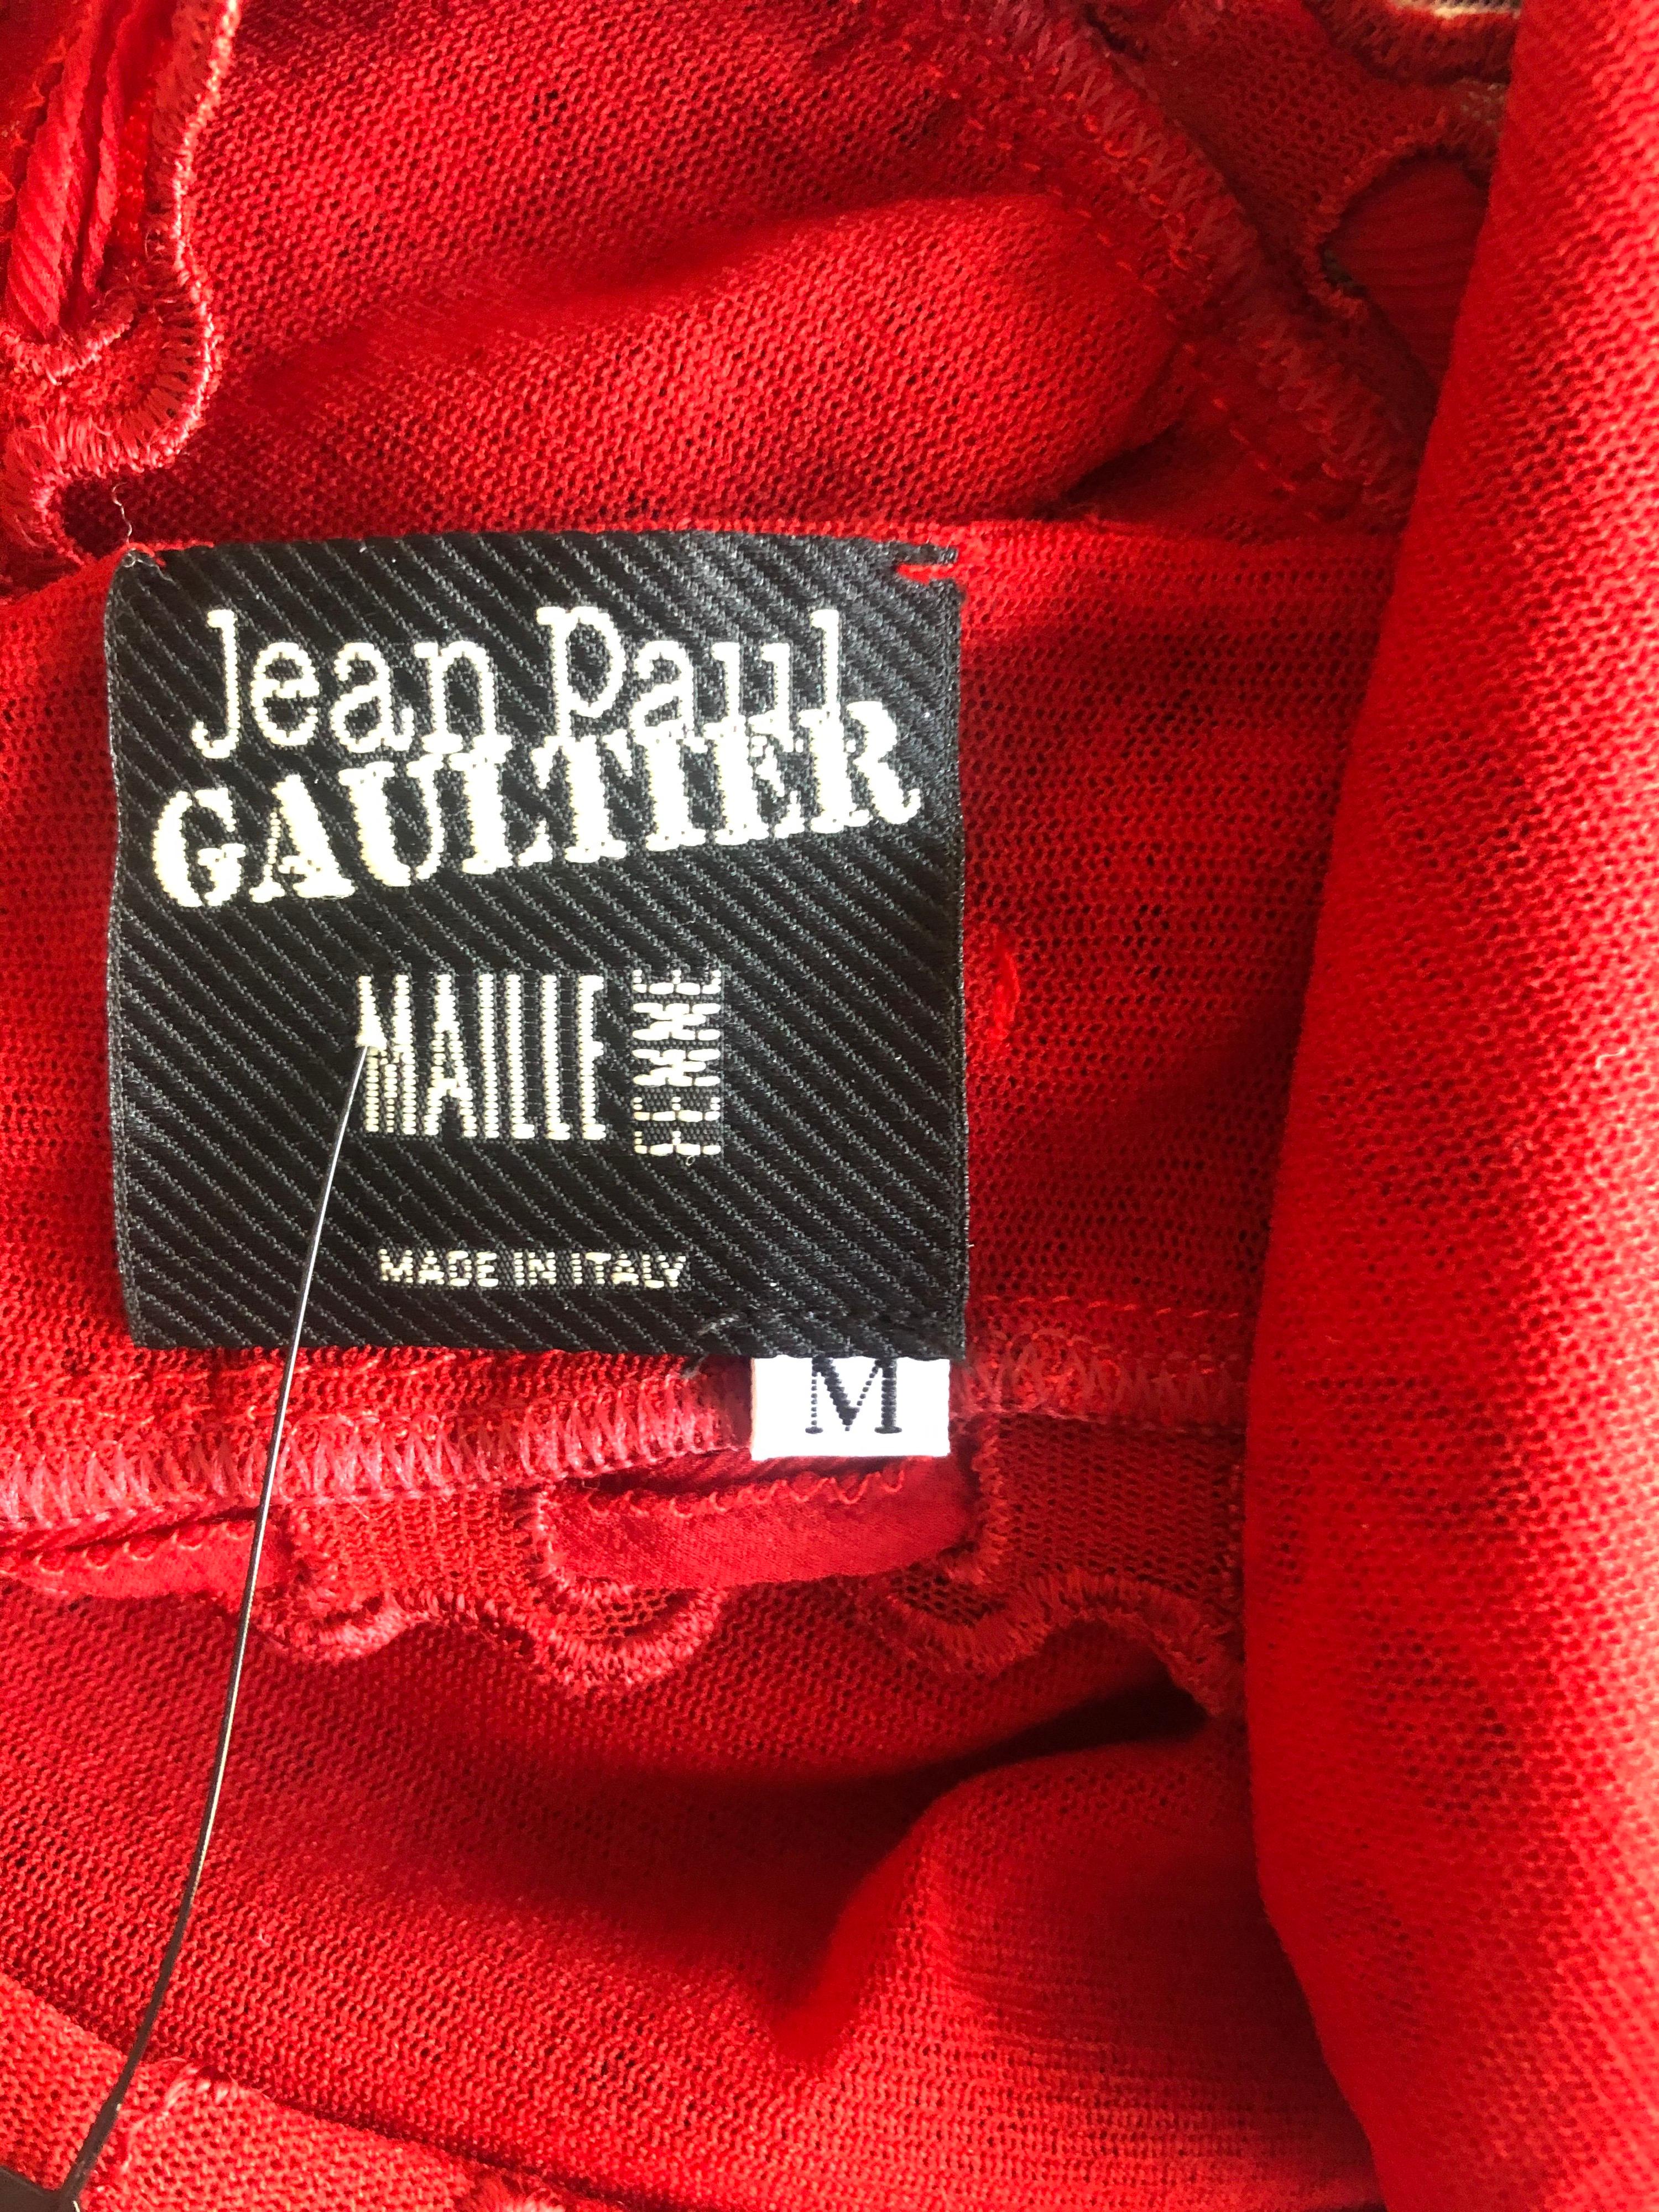 Jean Paul Gaultier 1990's Vintage Eyelet Red Bralette Bra Crop Top  For Sale 1